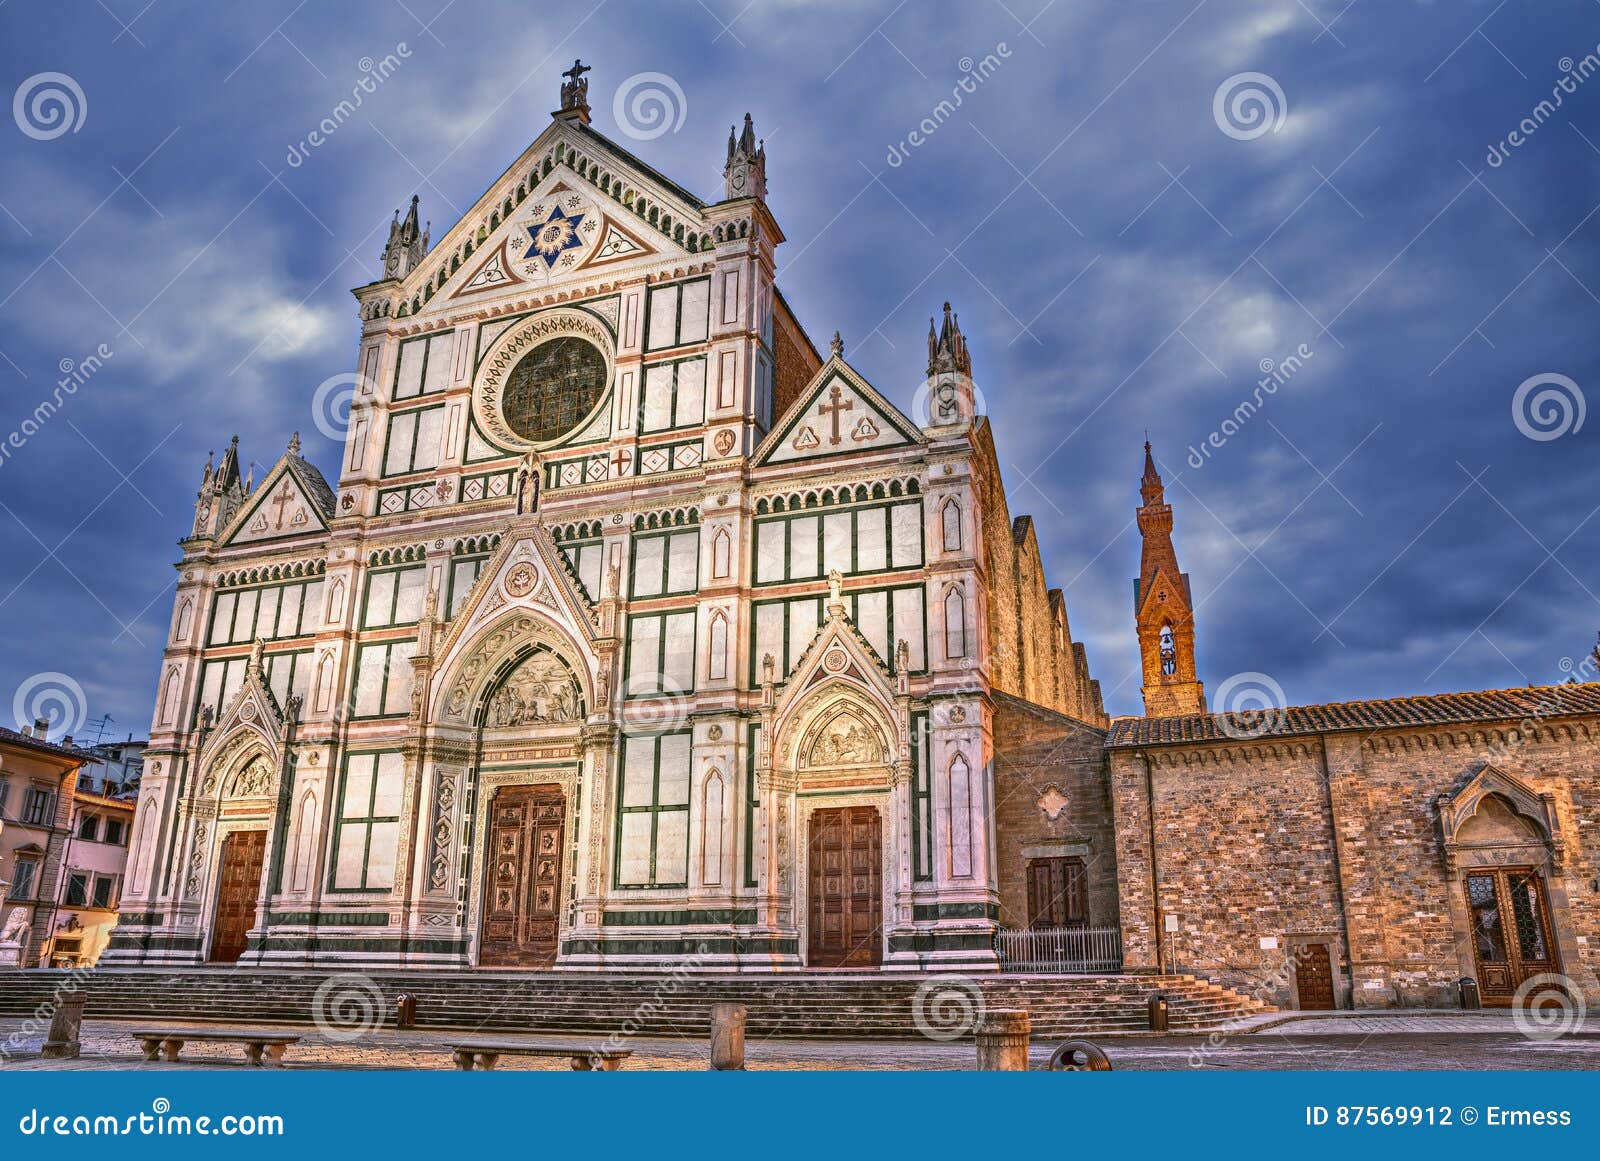 florence, tuscany, italy: basilica of santa croce